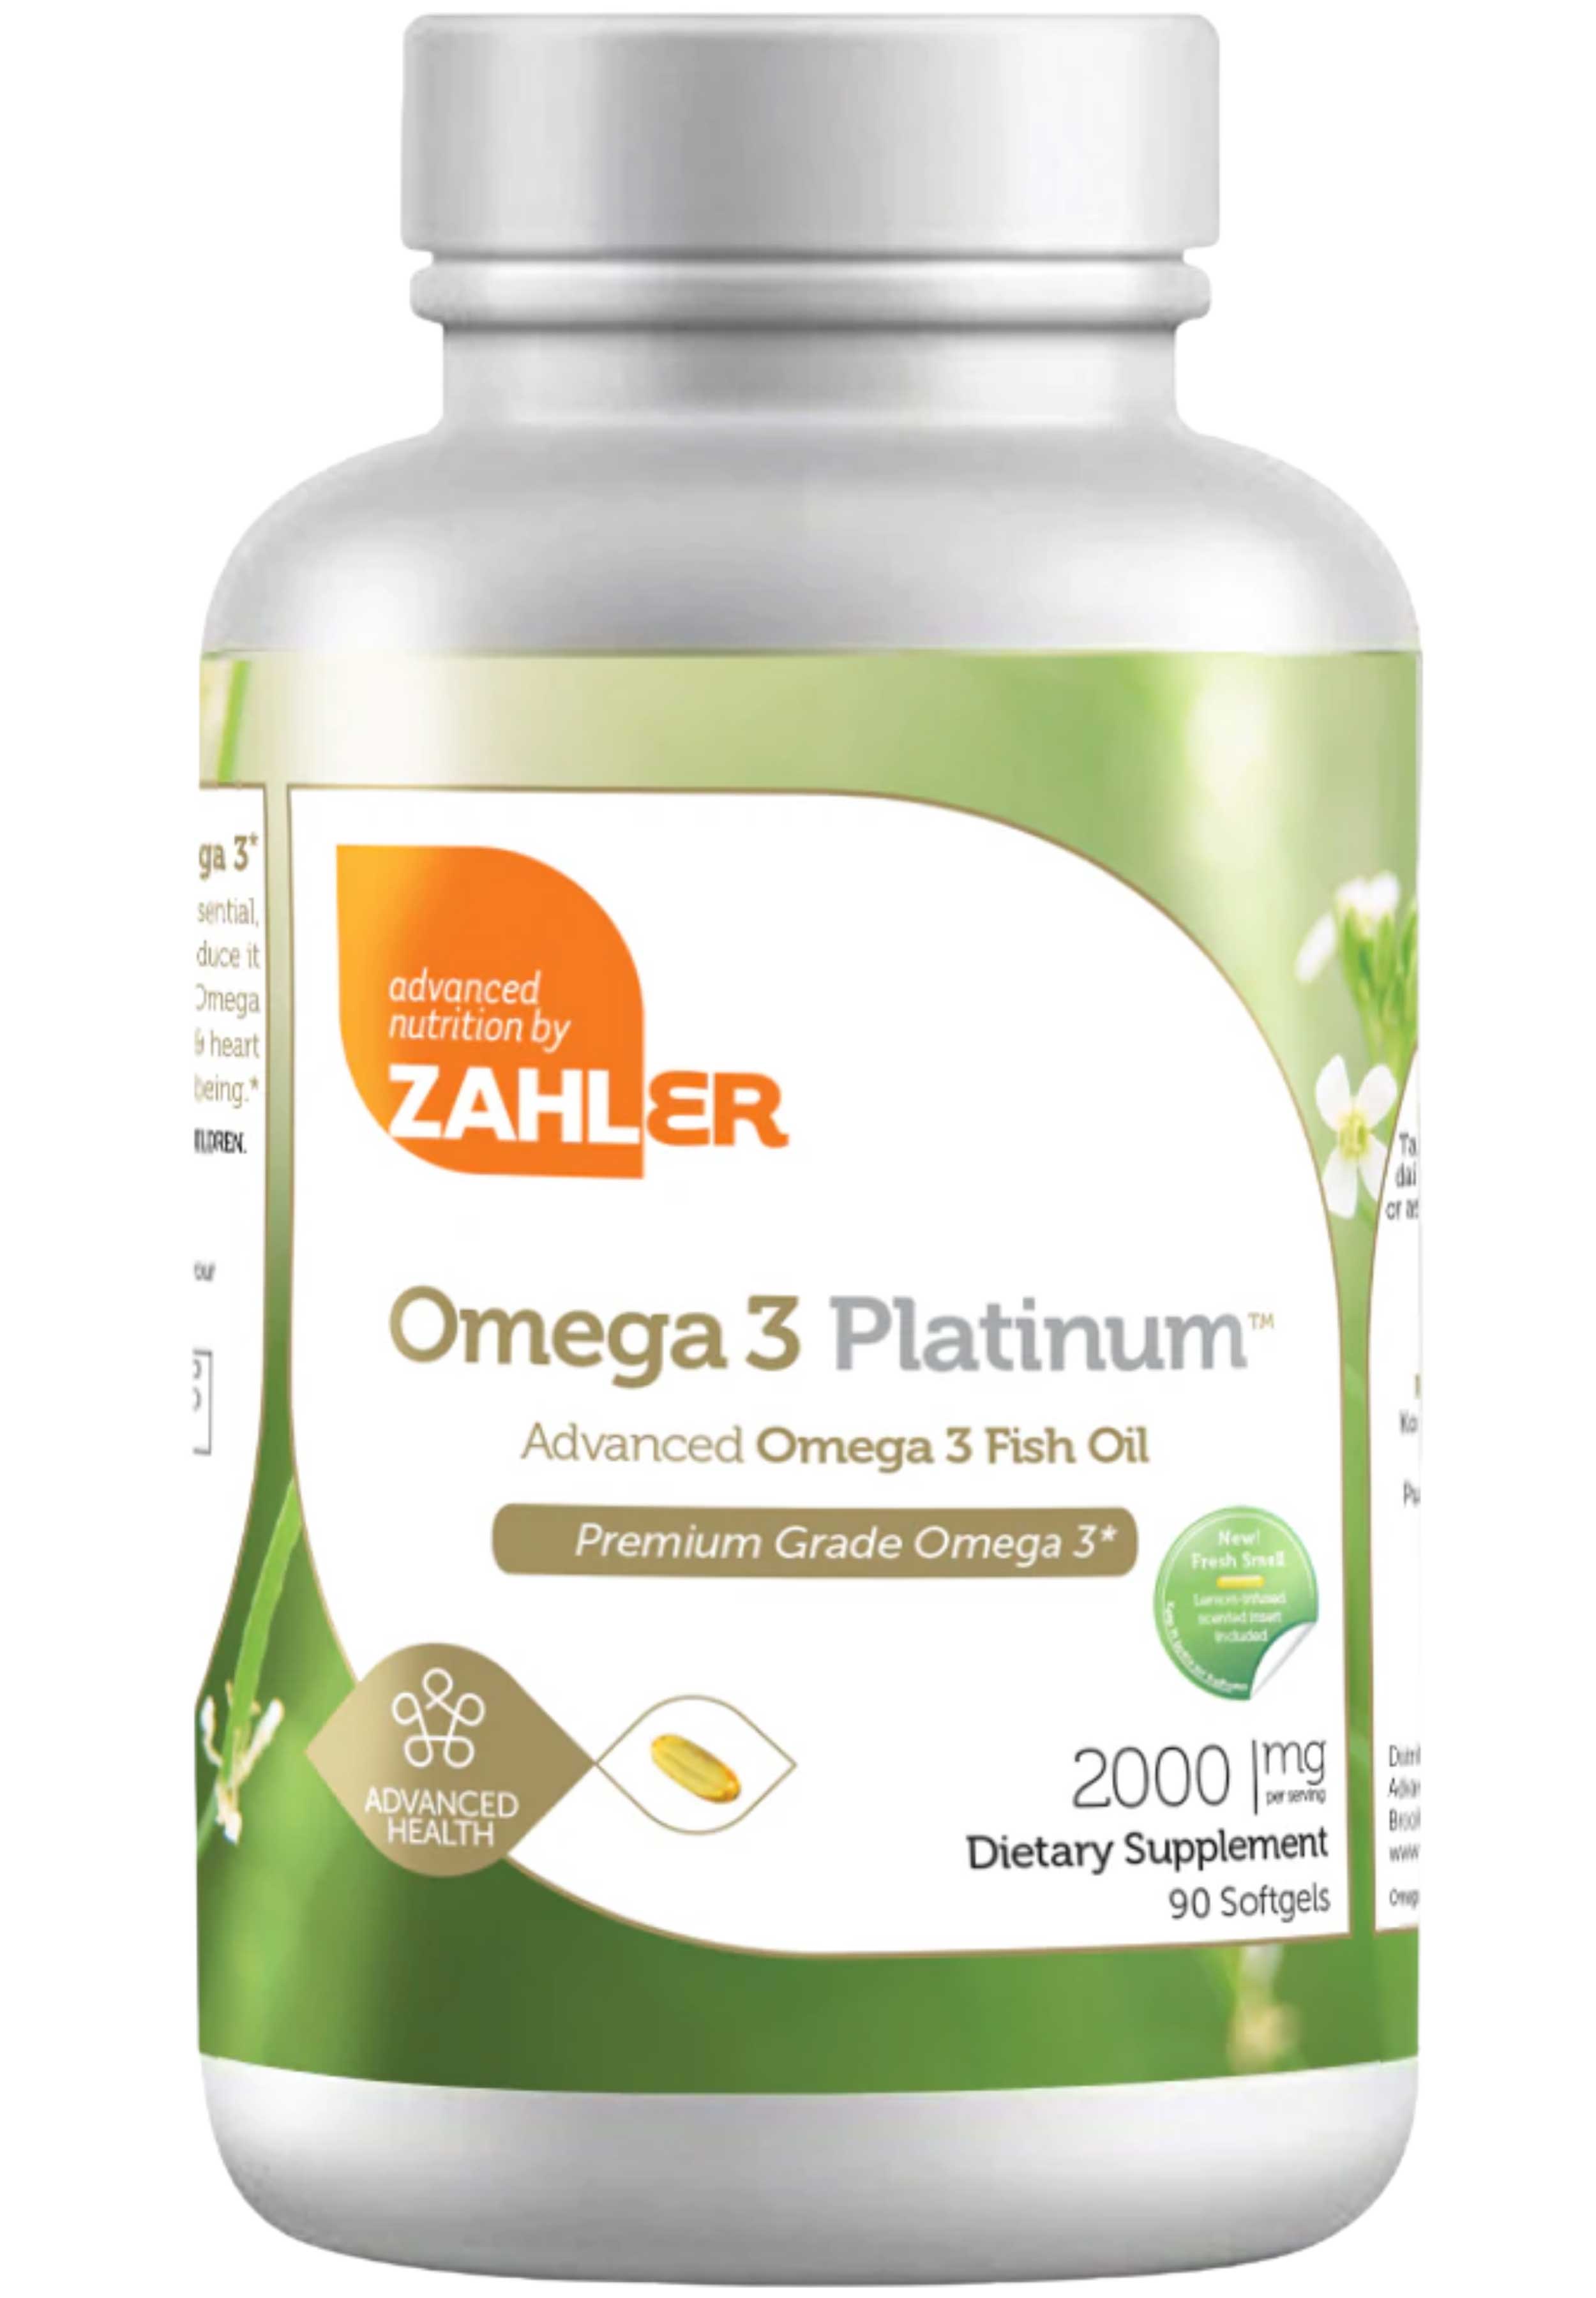 Advanced Nutrition By Zahler Omega 3 Platinum